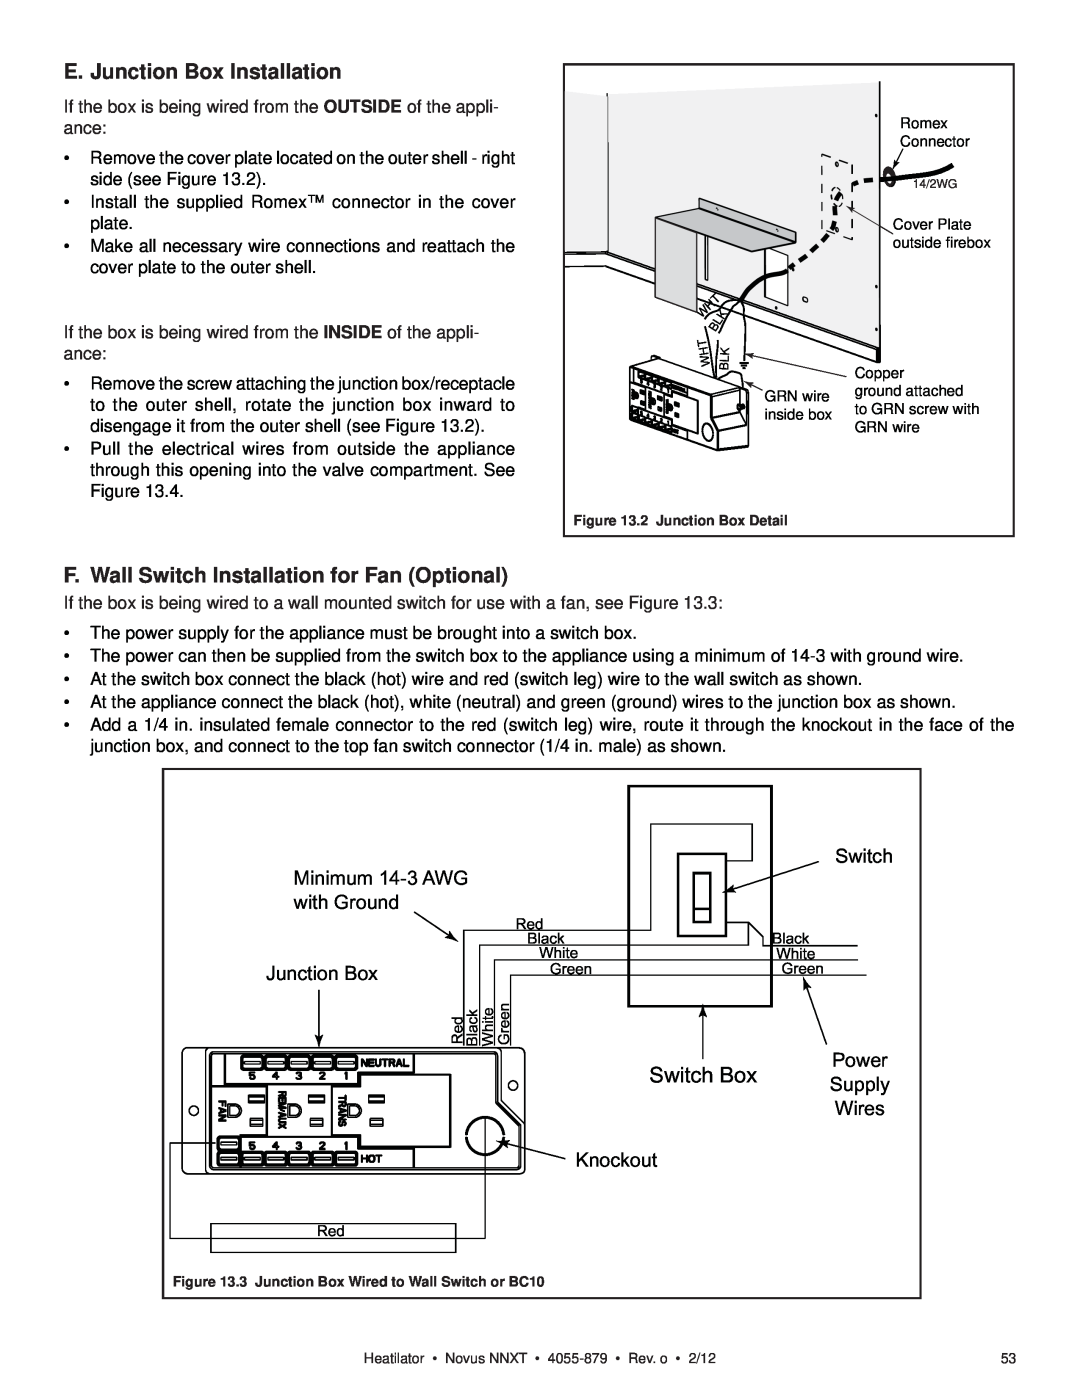 Heatiator NNXT4236I E. Junction Box Installation, F. Wall Switch Installation for Fan Optional, Minimum 14-3 AWG, Power 